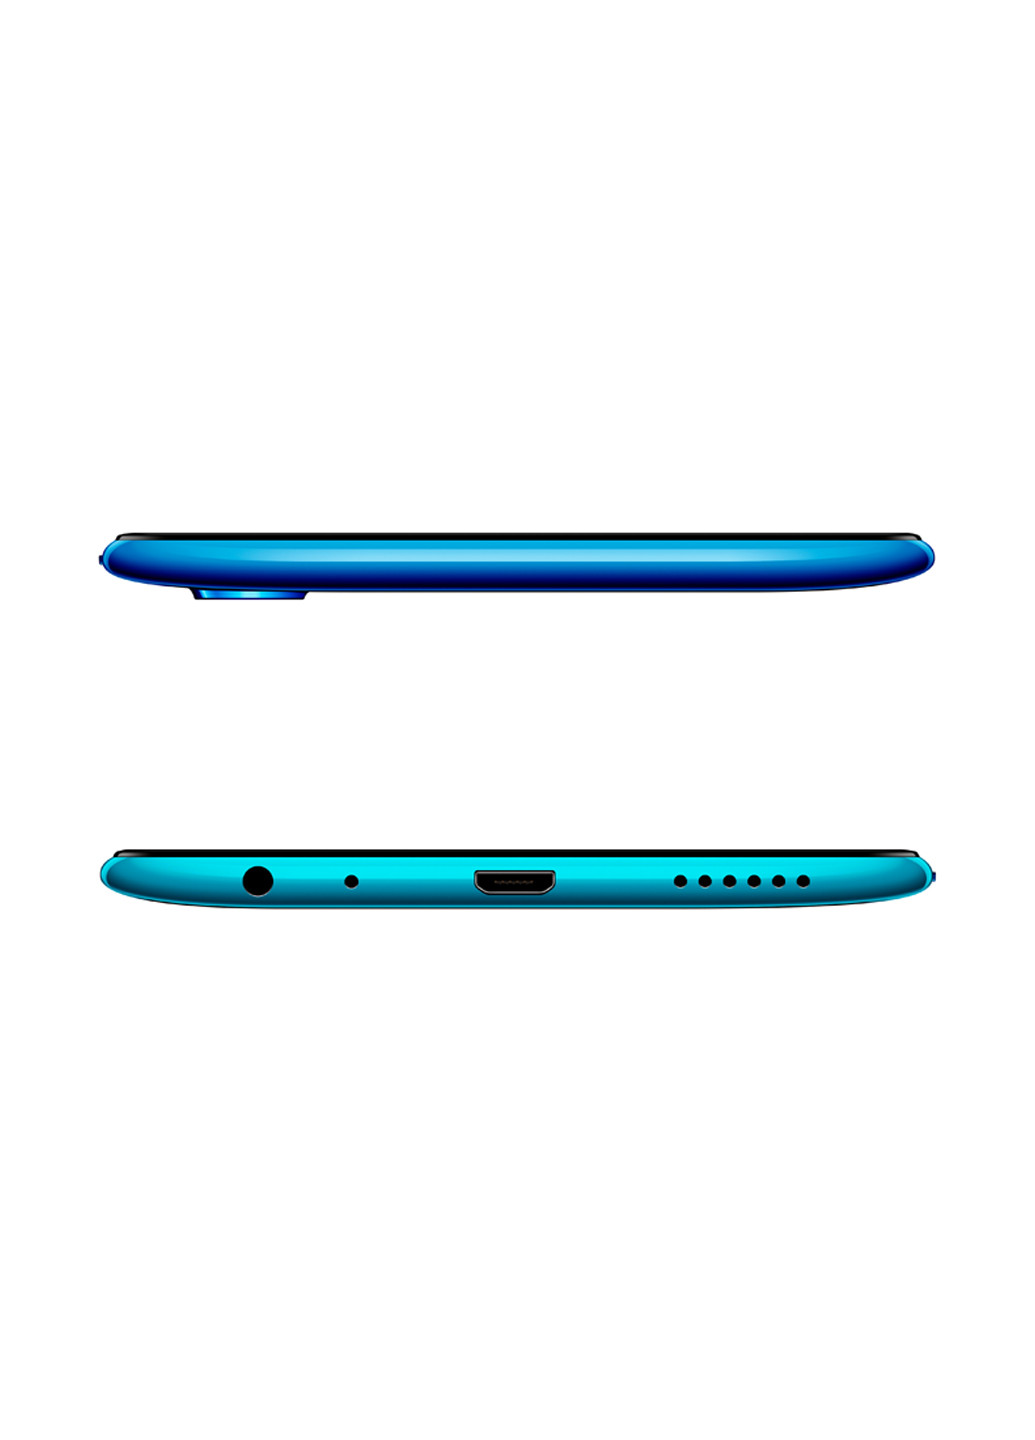 Смартфон Vivo y91c 2/32gb ocean blue (137494214)